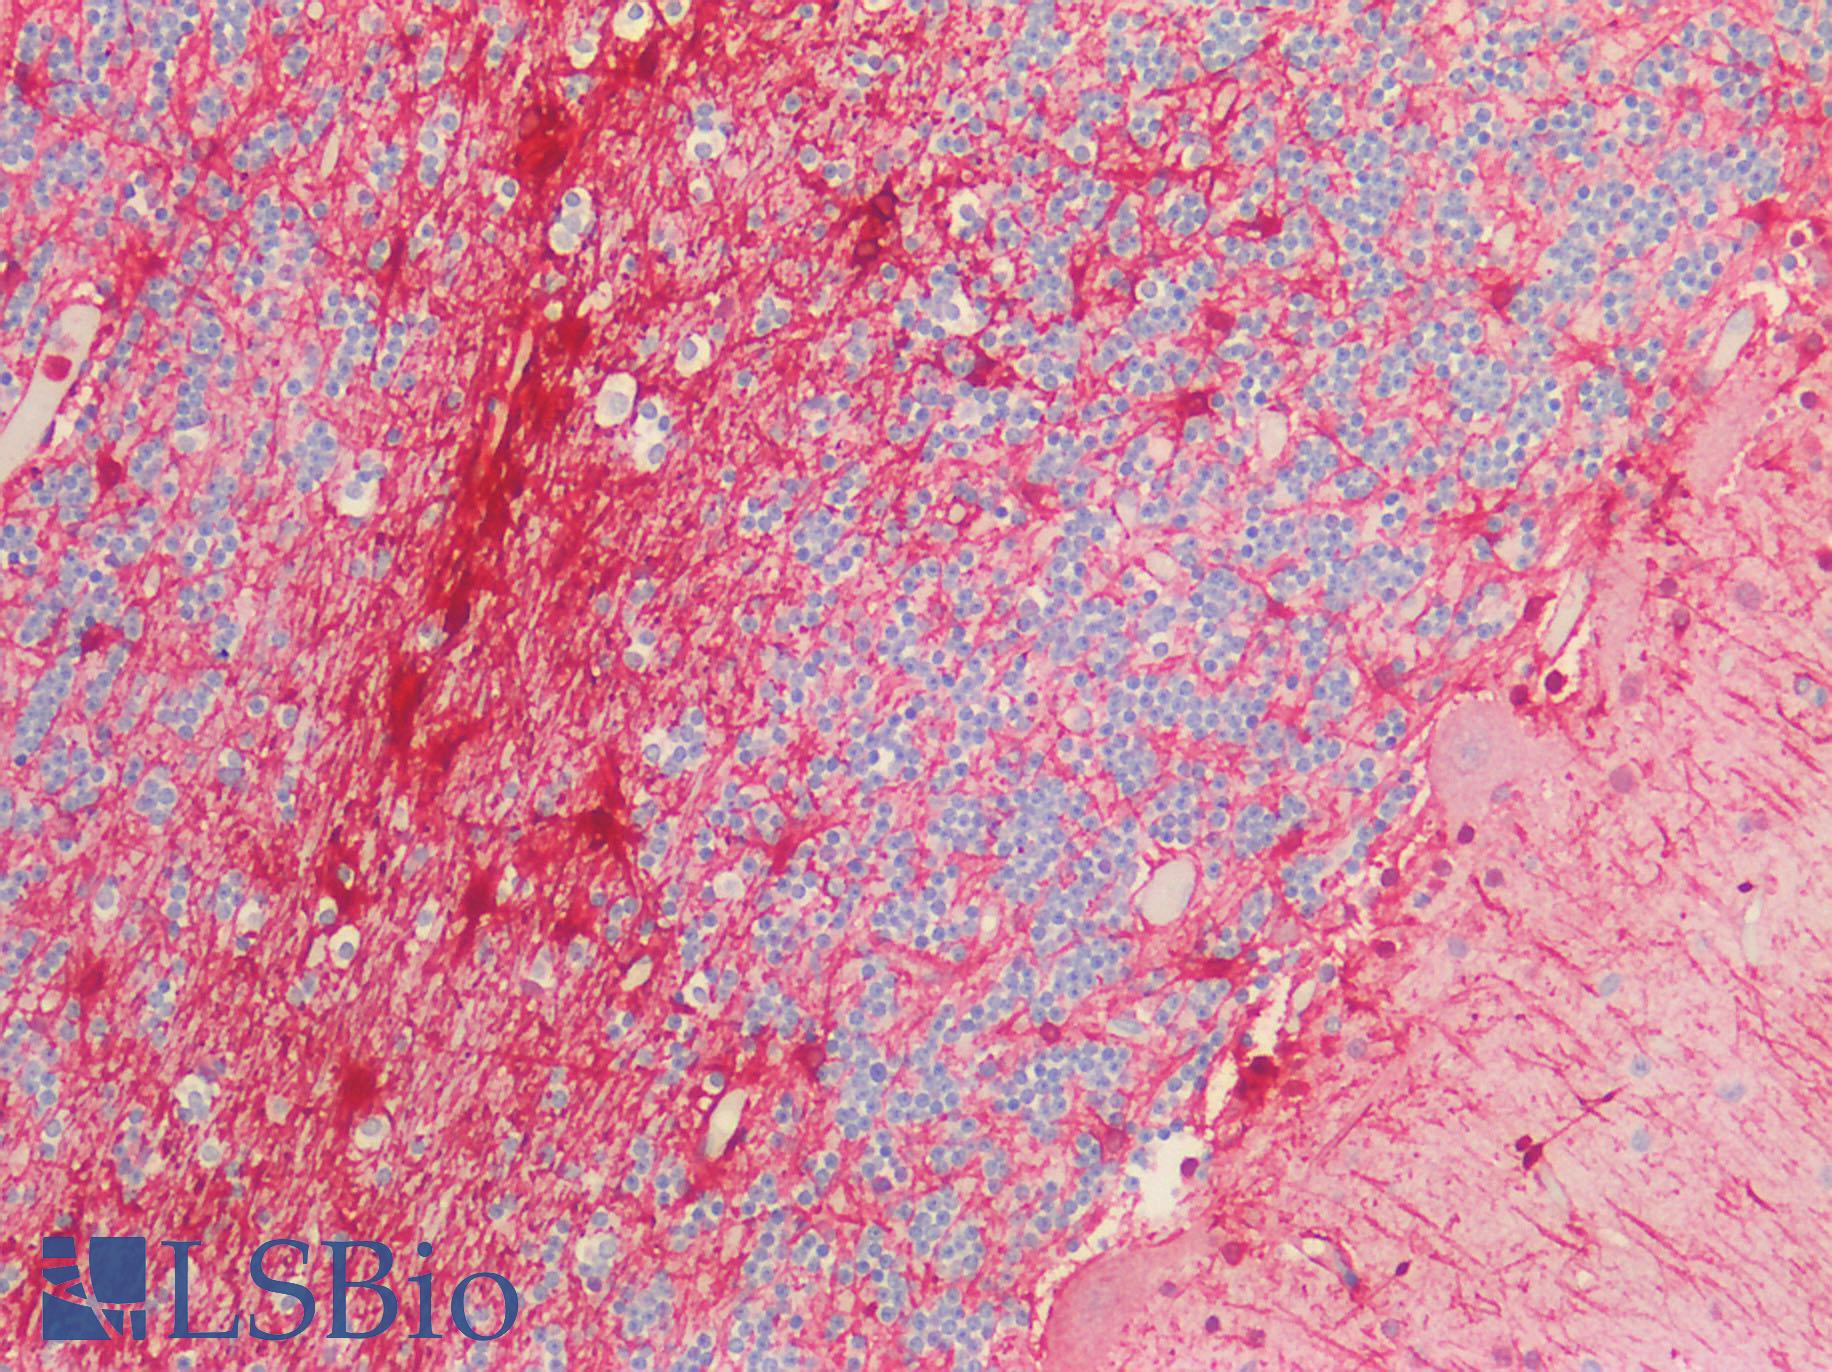 GFAP Antibody - Human Brain, Cerebellum: Formalin-Fixed, Paraffin-Embedded (FFPE) HIER using 10 mM sodium citrate buffer pH 6.0